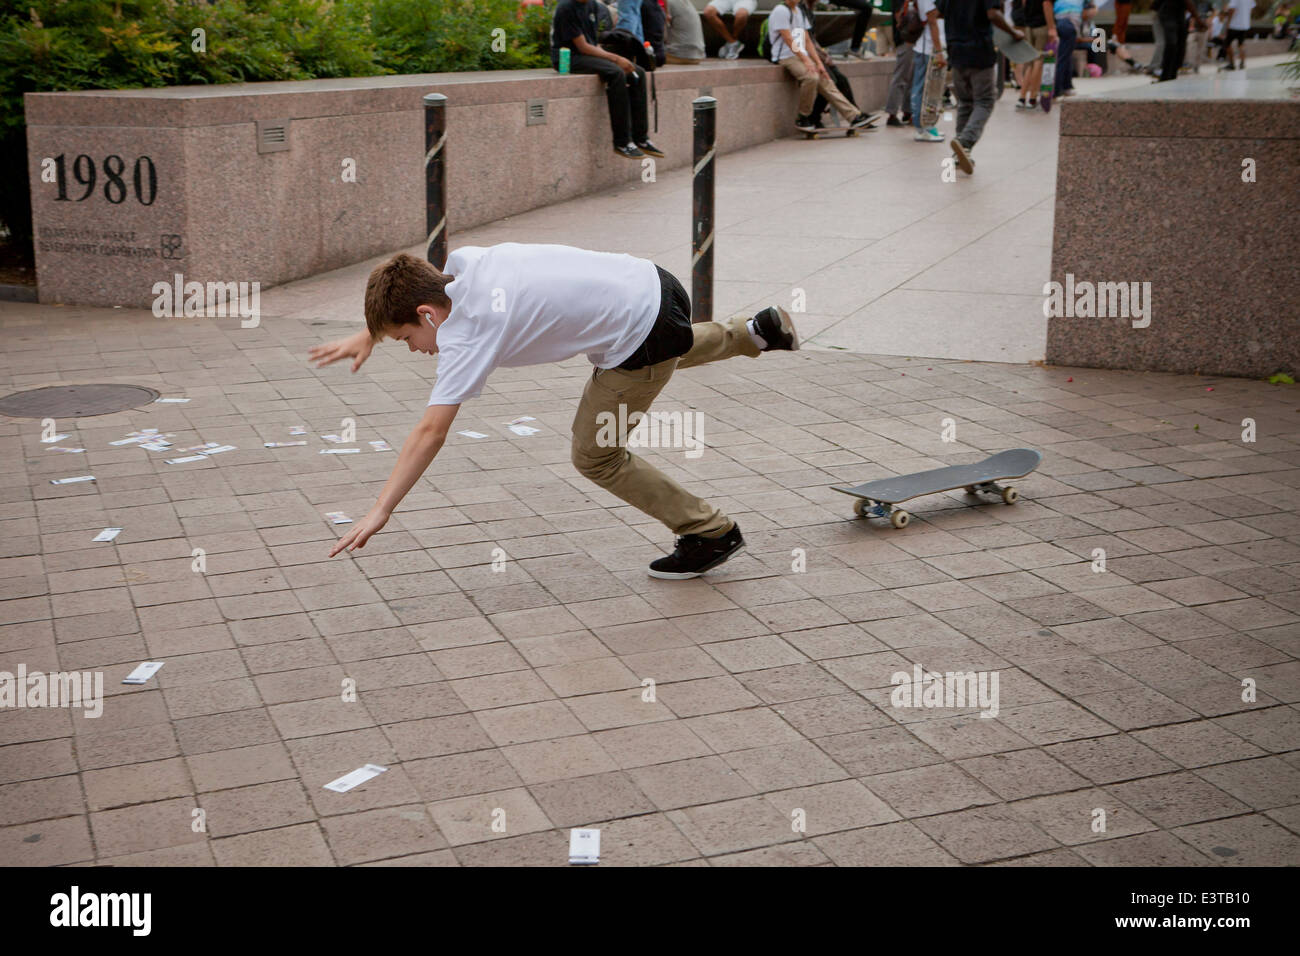 Straße Skateboarder fallen vom Sprung - USA Stockfoto